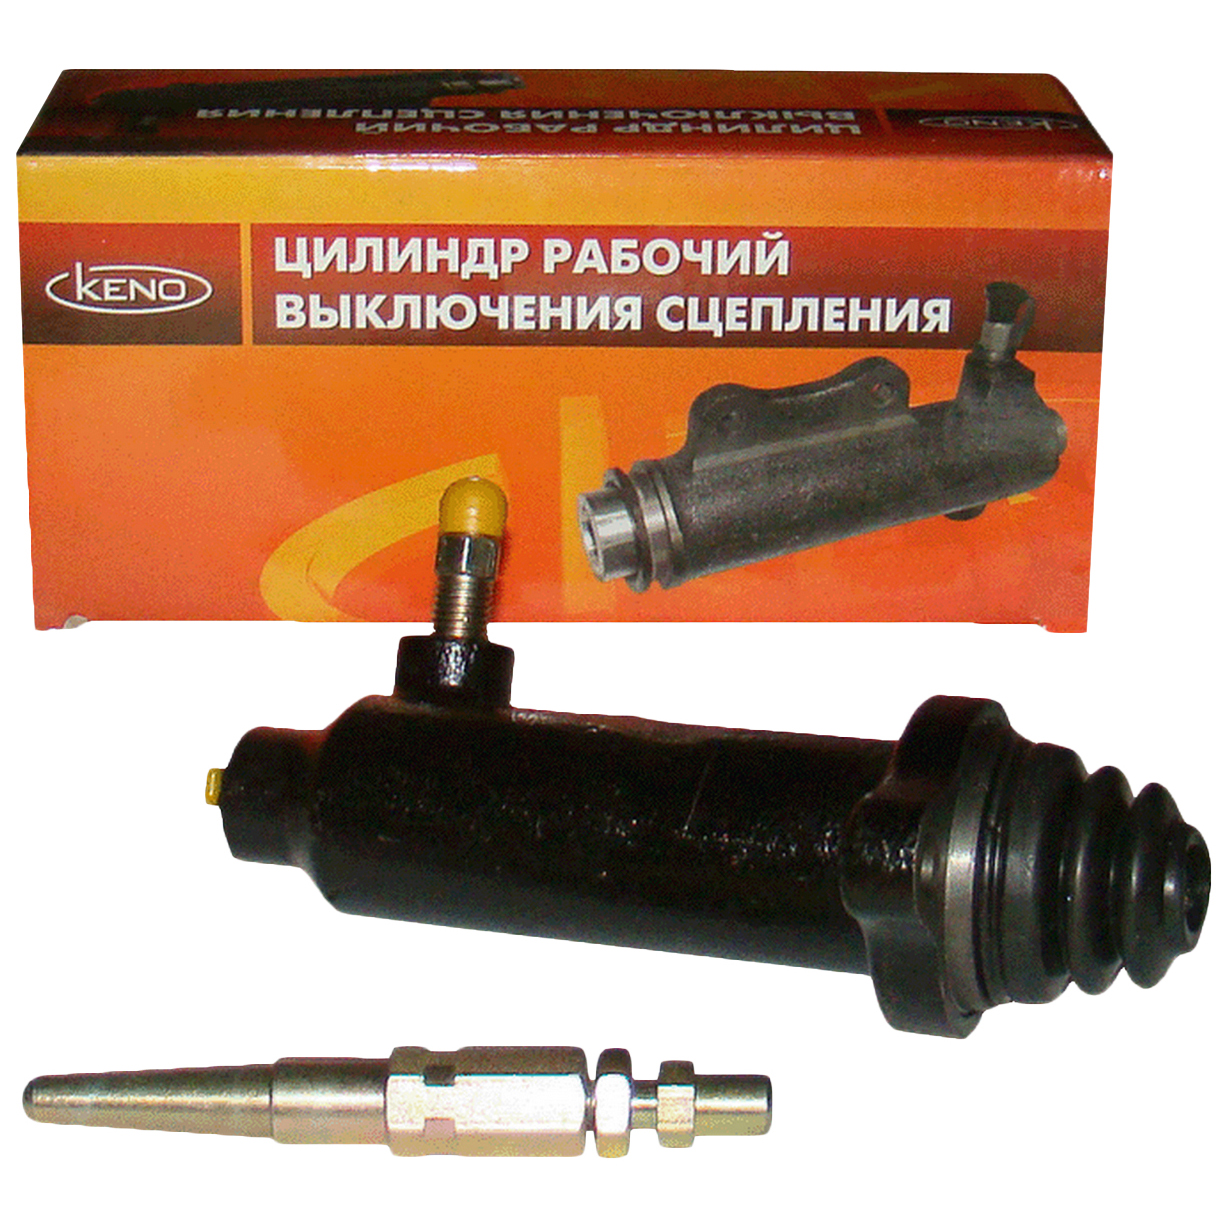 Цилиндр сцепления УАЗ-3160 (рабочий) KENO